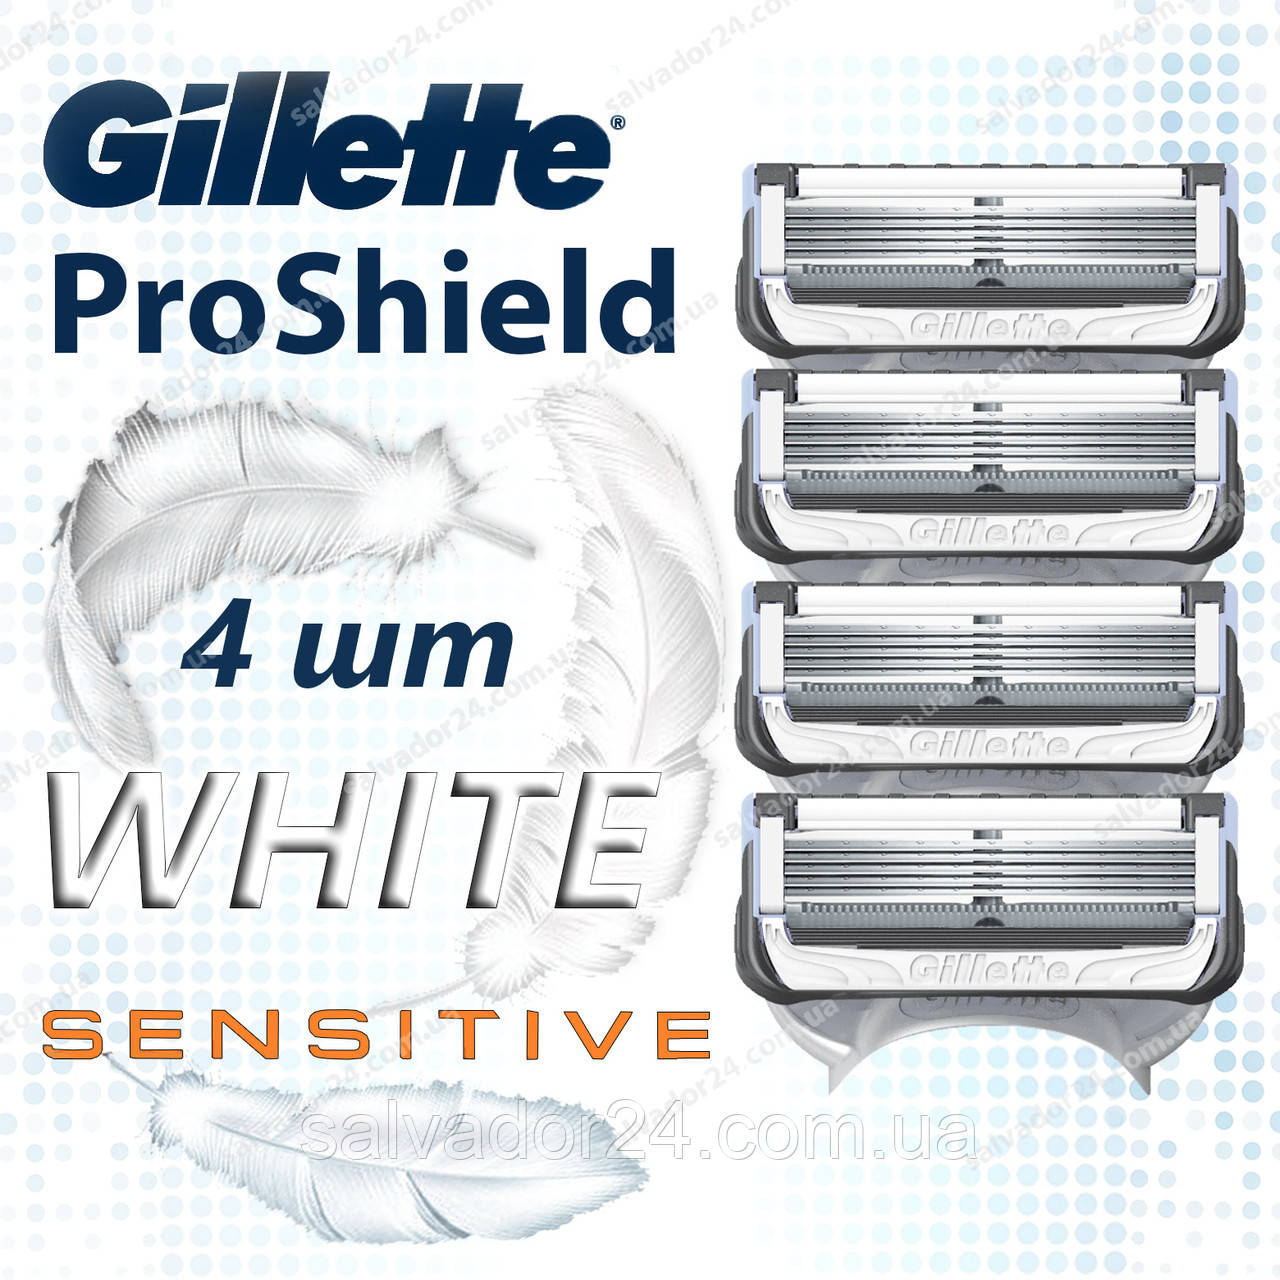 Gillette Fusion ProShield White Sensitive 4 шт. змінні касети для гоління США